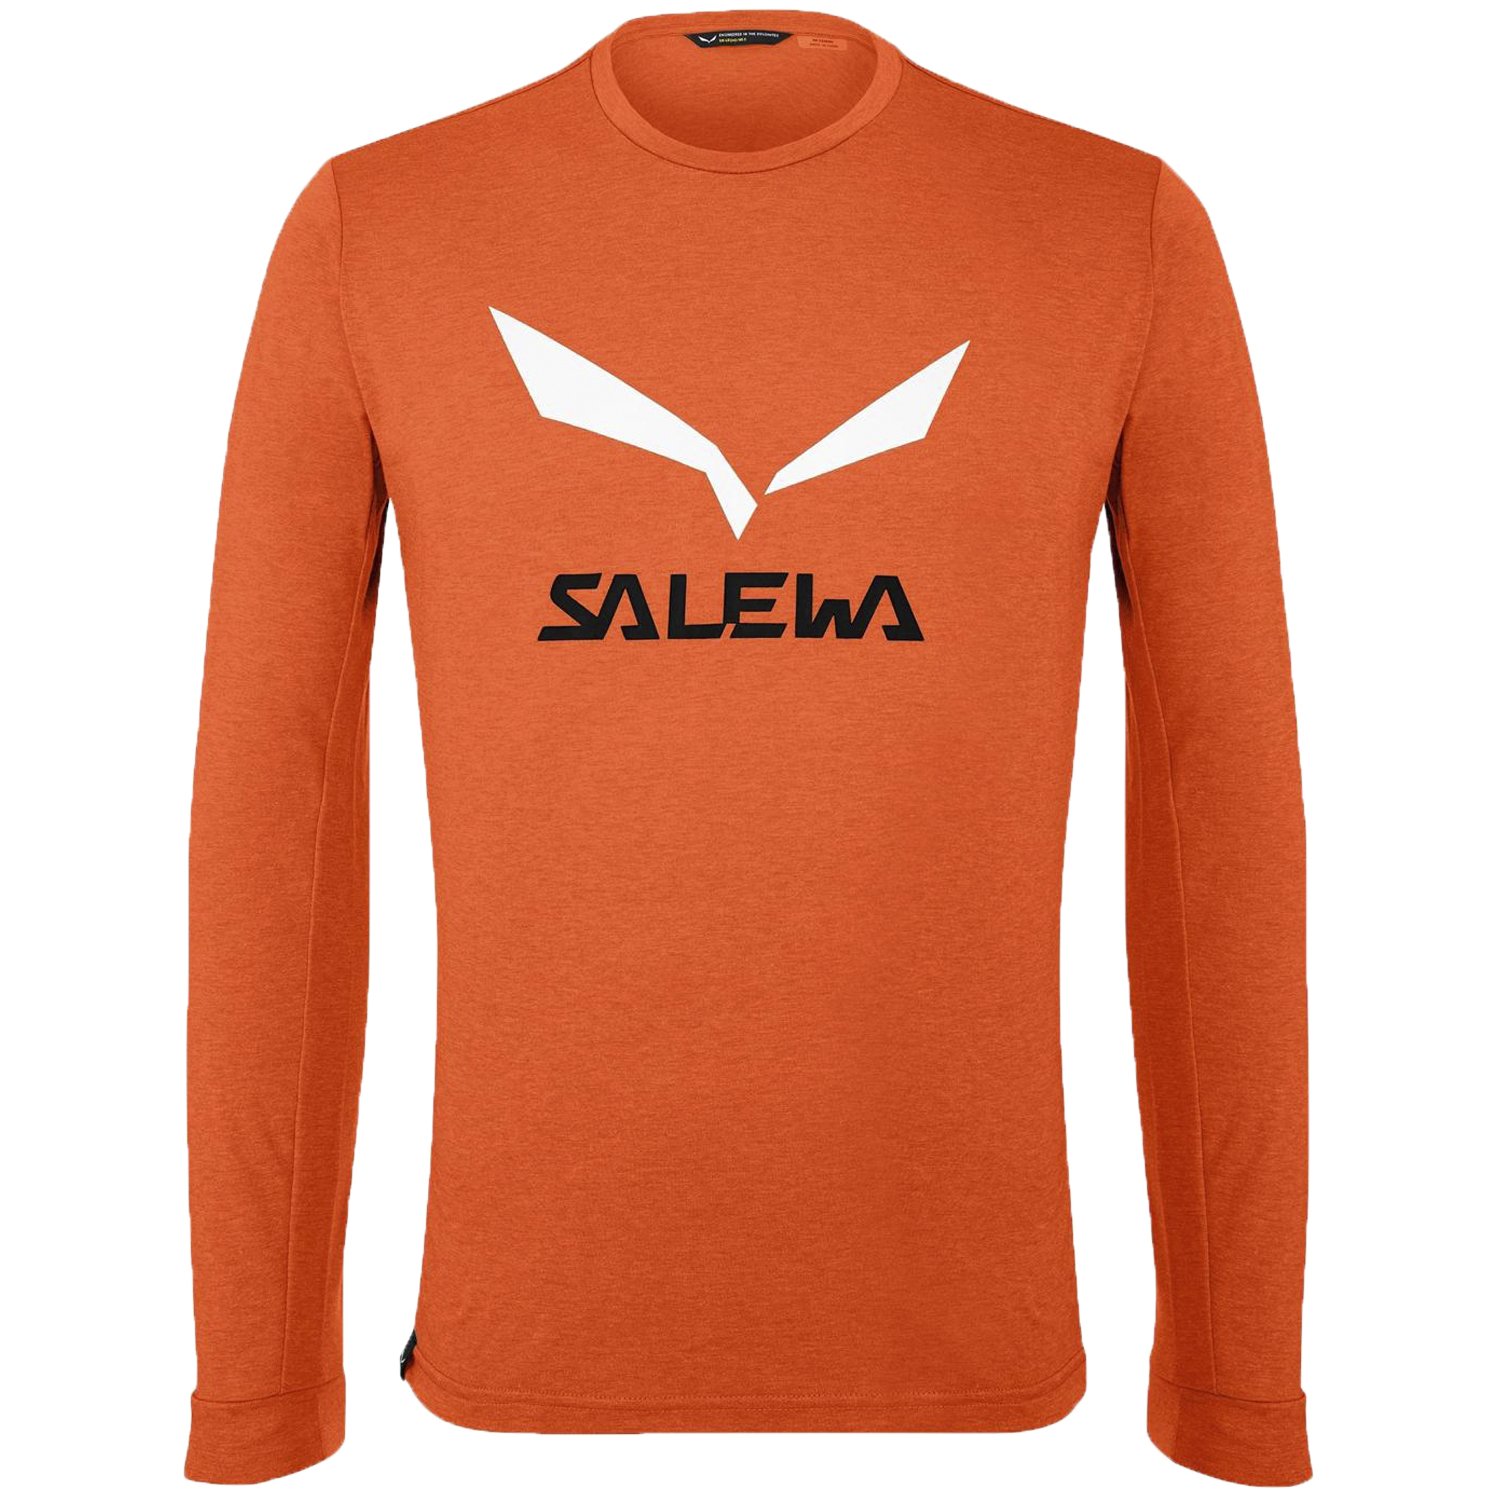 Футболка Salewa Solidlogo Dry Men's L/S Tee Red Orange Melange, с длинным рукавом, мужская, 00-0000027340_4156 mjolk футболка с длинным рукавом лебеди